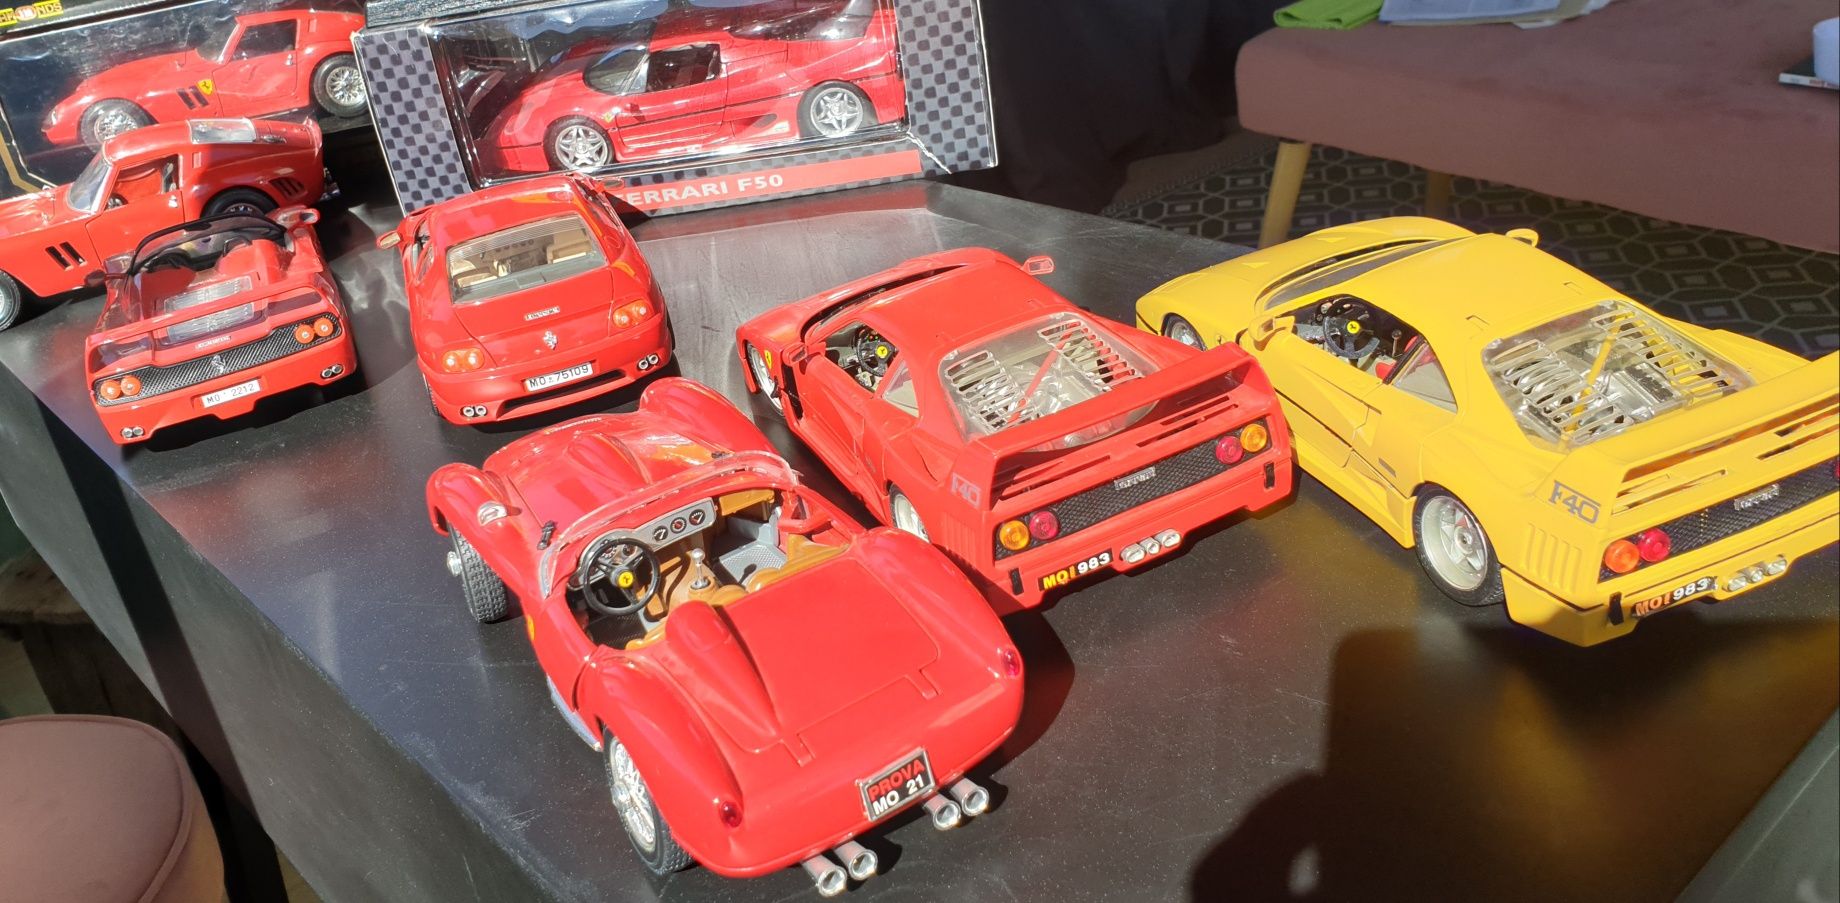 Ferrari 250 le mans e GTO + F40 ...1/18